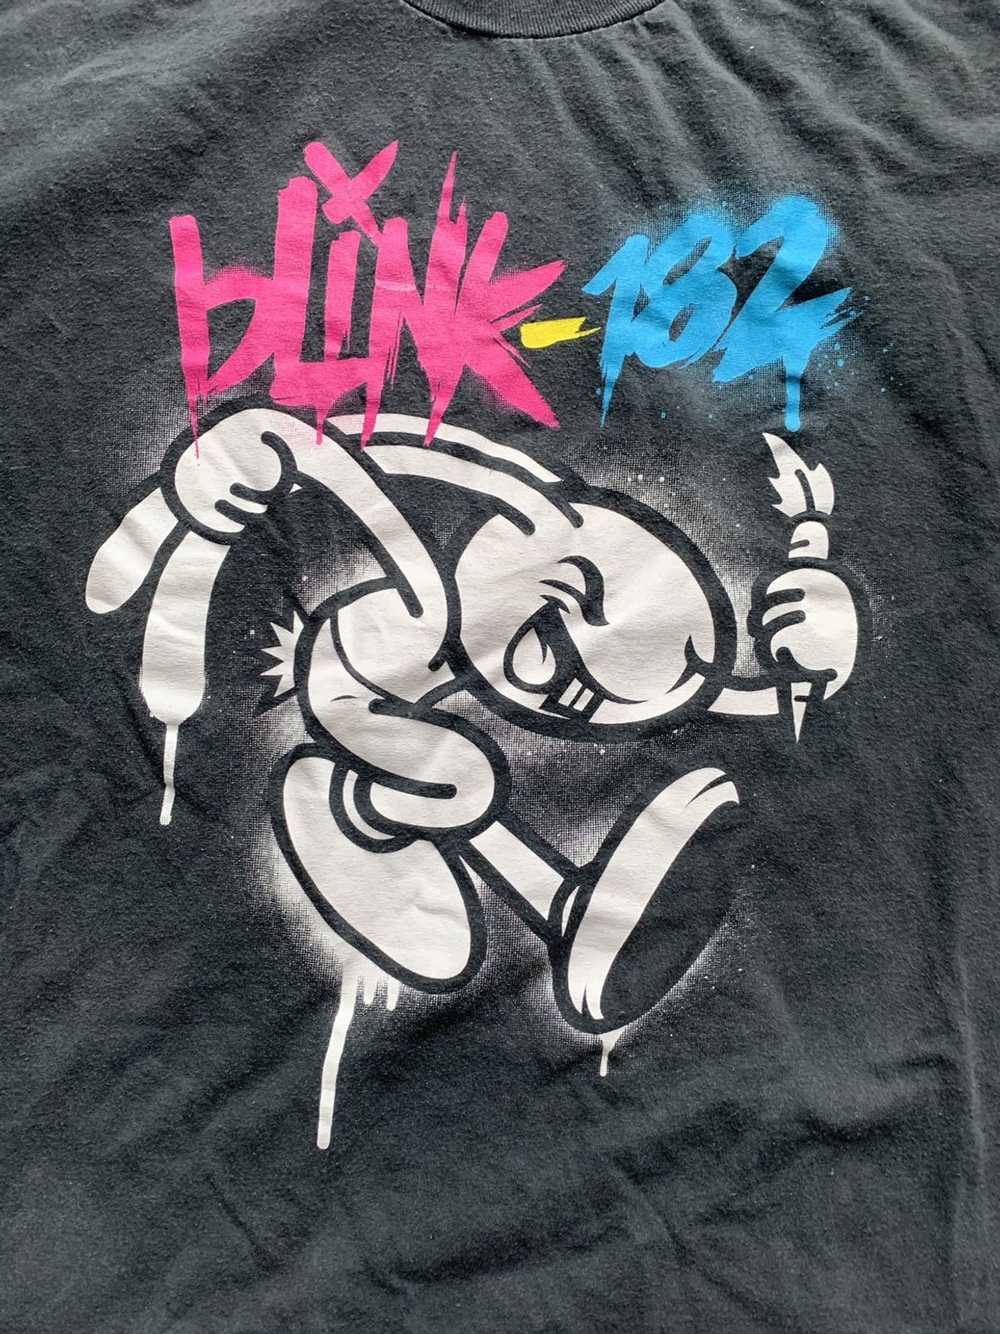 Band Tees × Vintage BLINK 182 2011 TOUR TEE - image 1